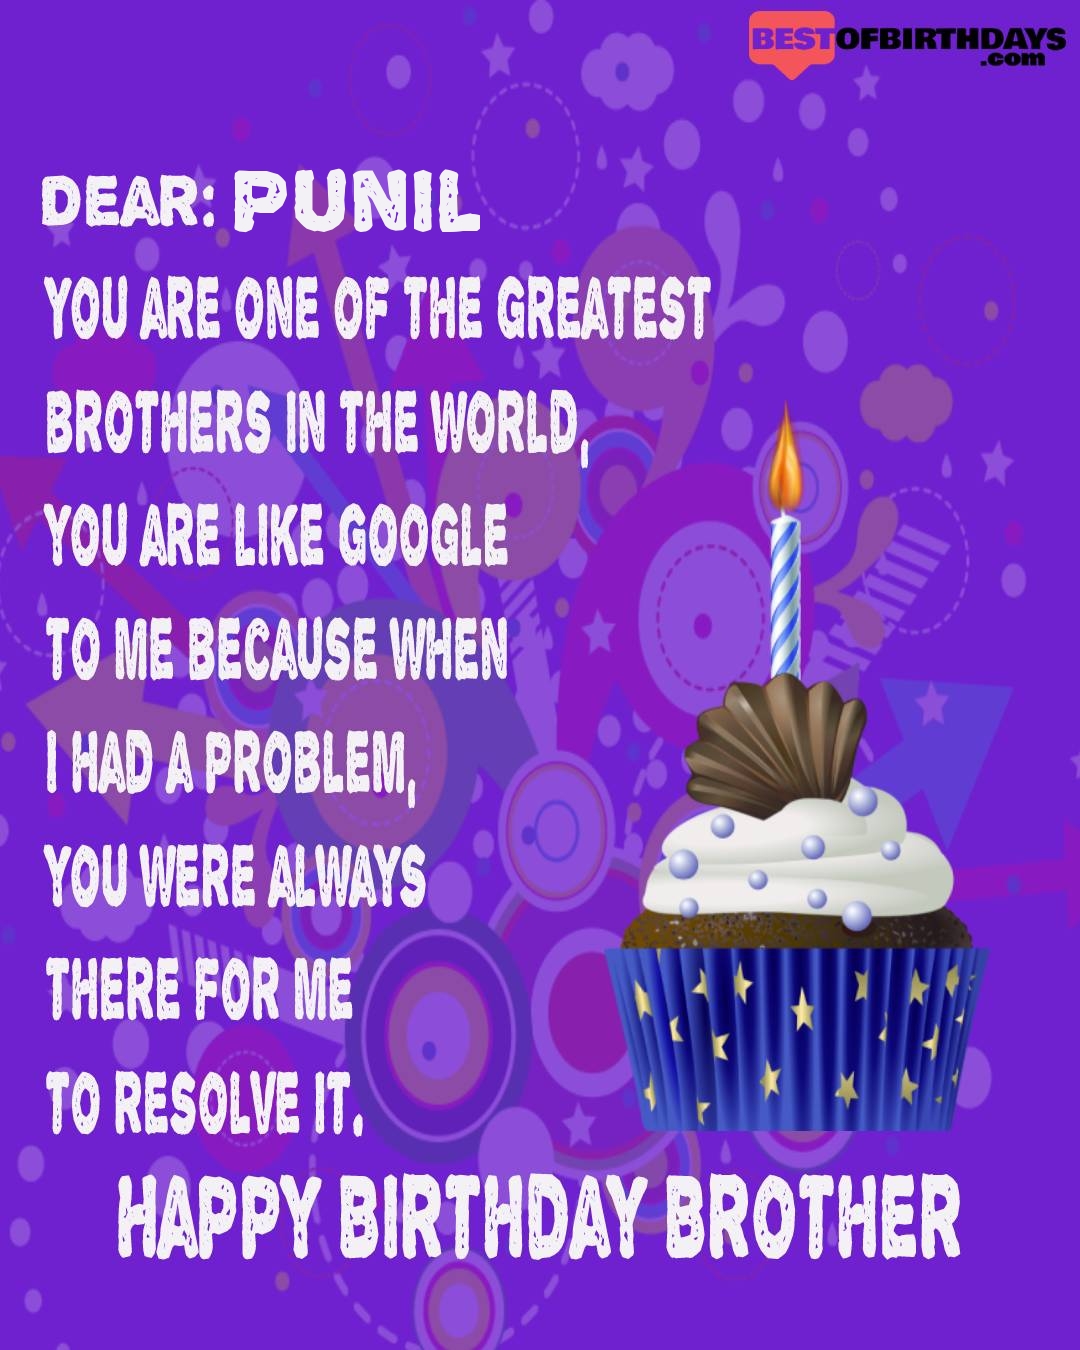 Happy birthday punil bhai brother bro